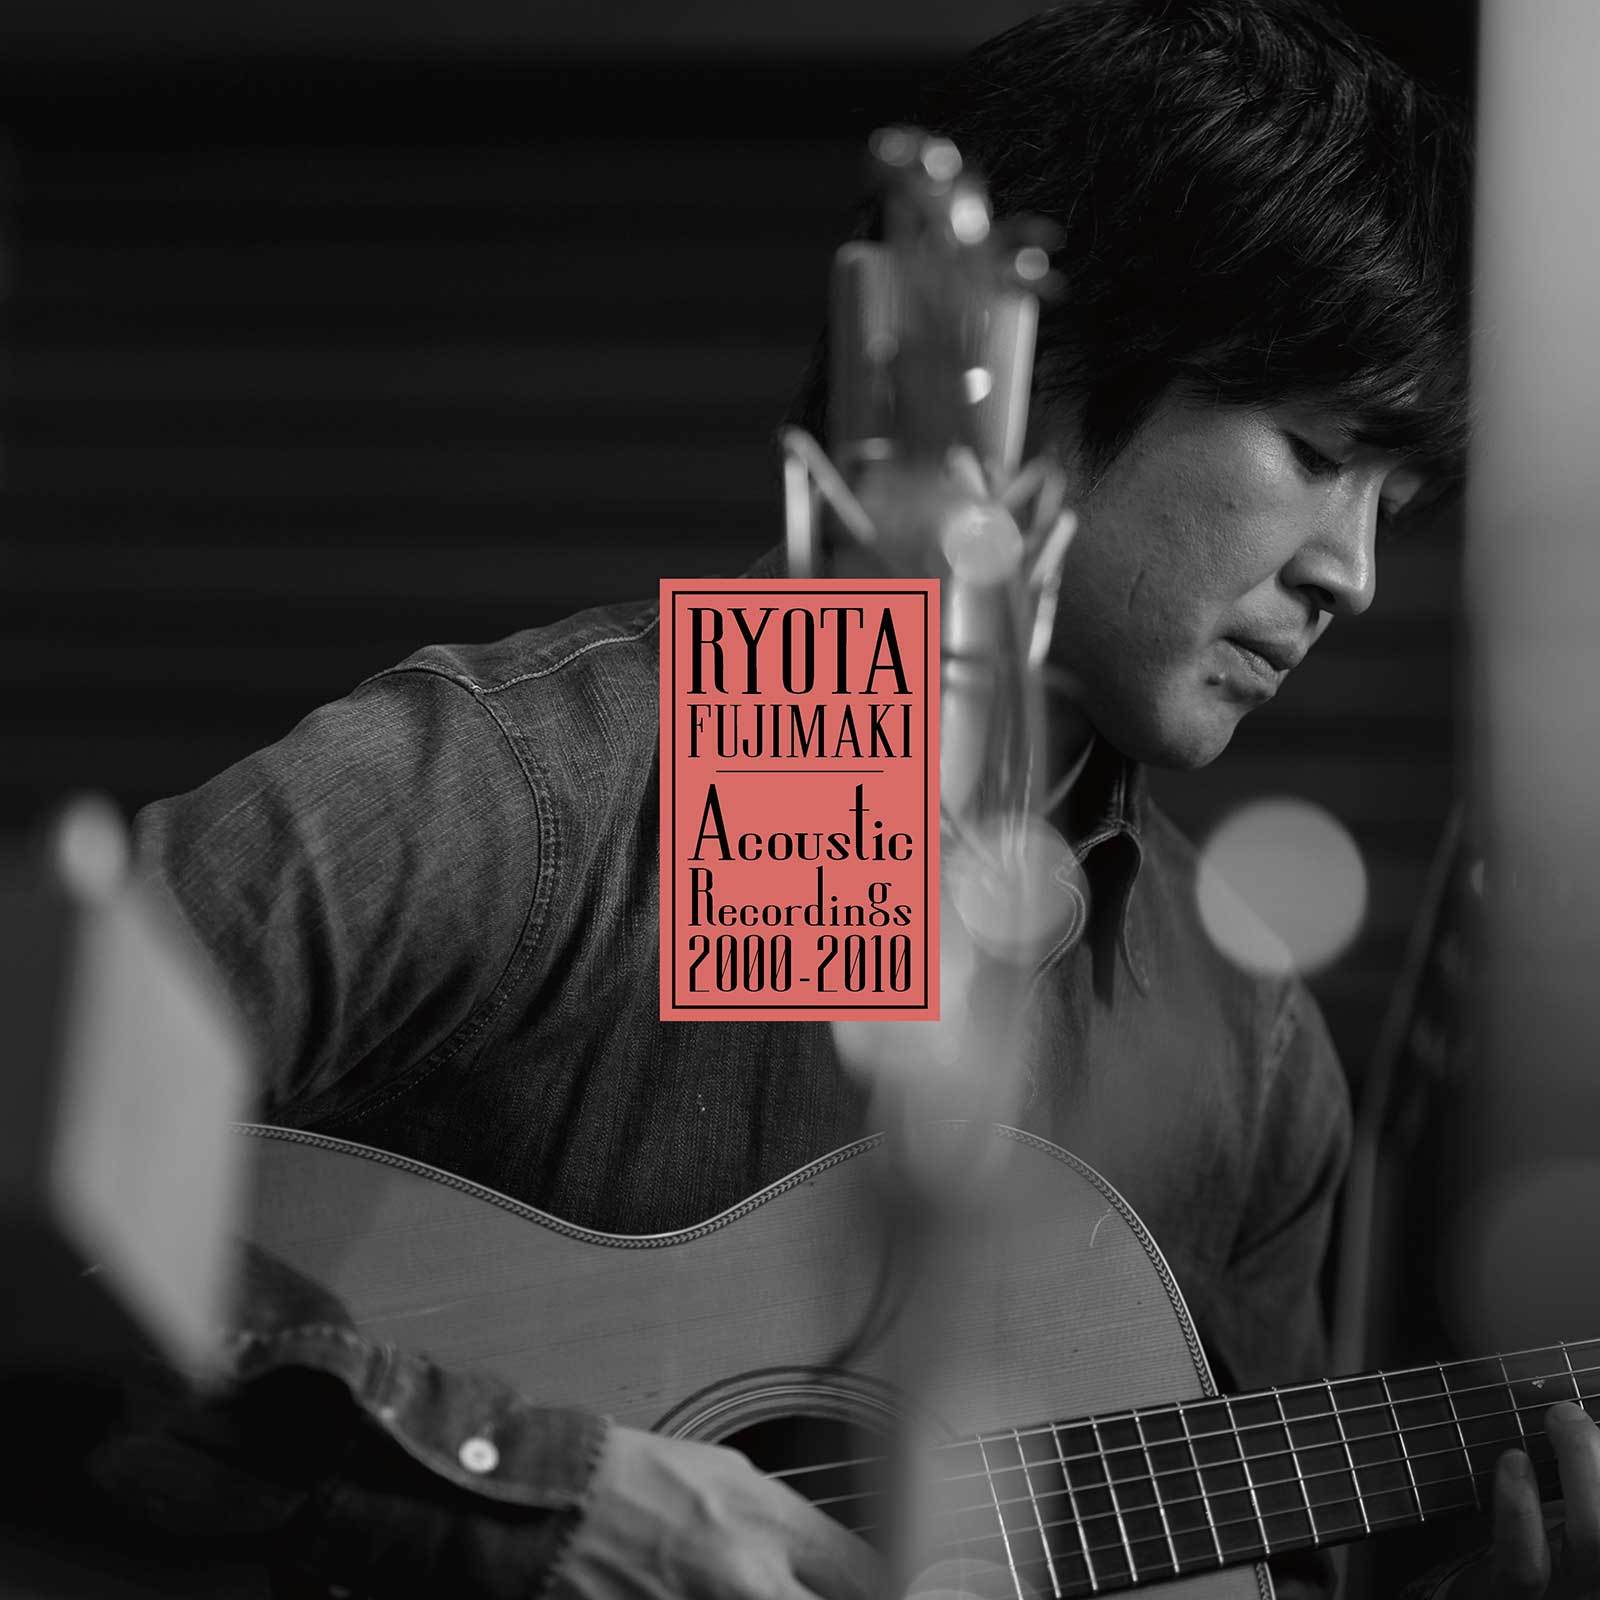 『RYOTA FUJIMAKI Acoustic Recordings 2000-2010』